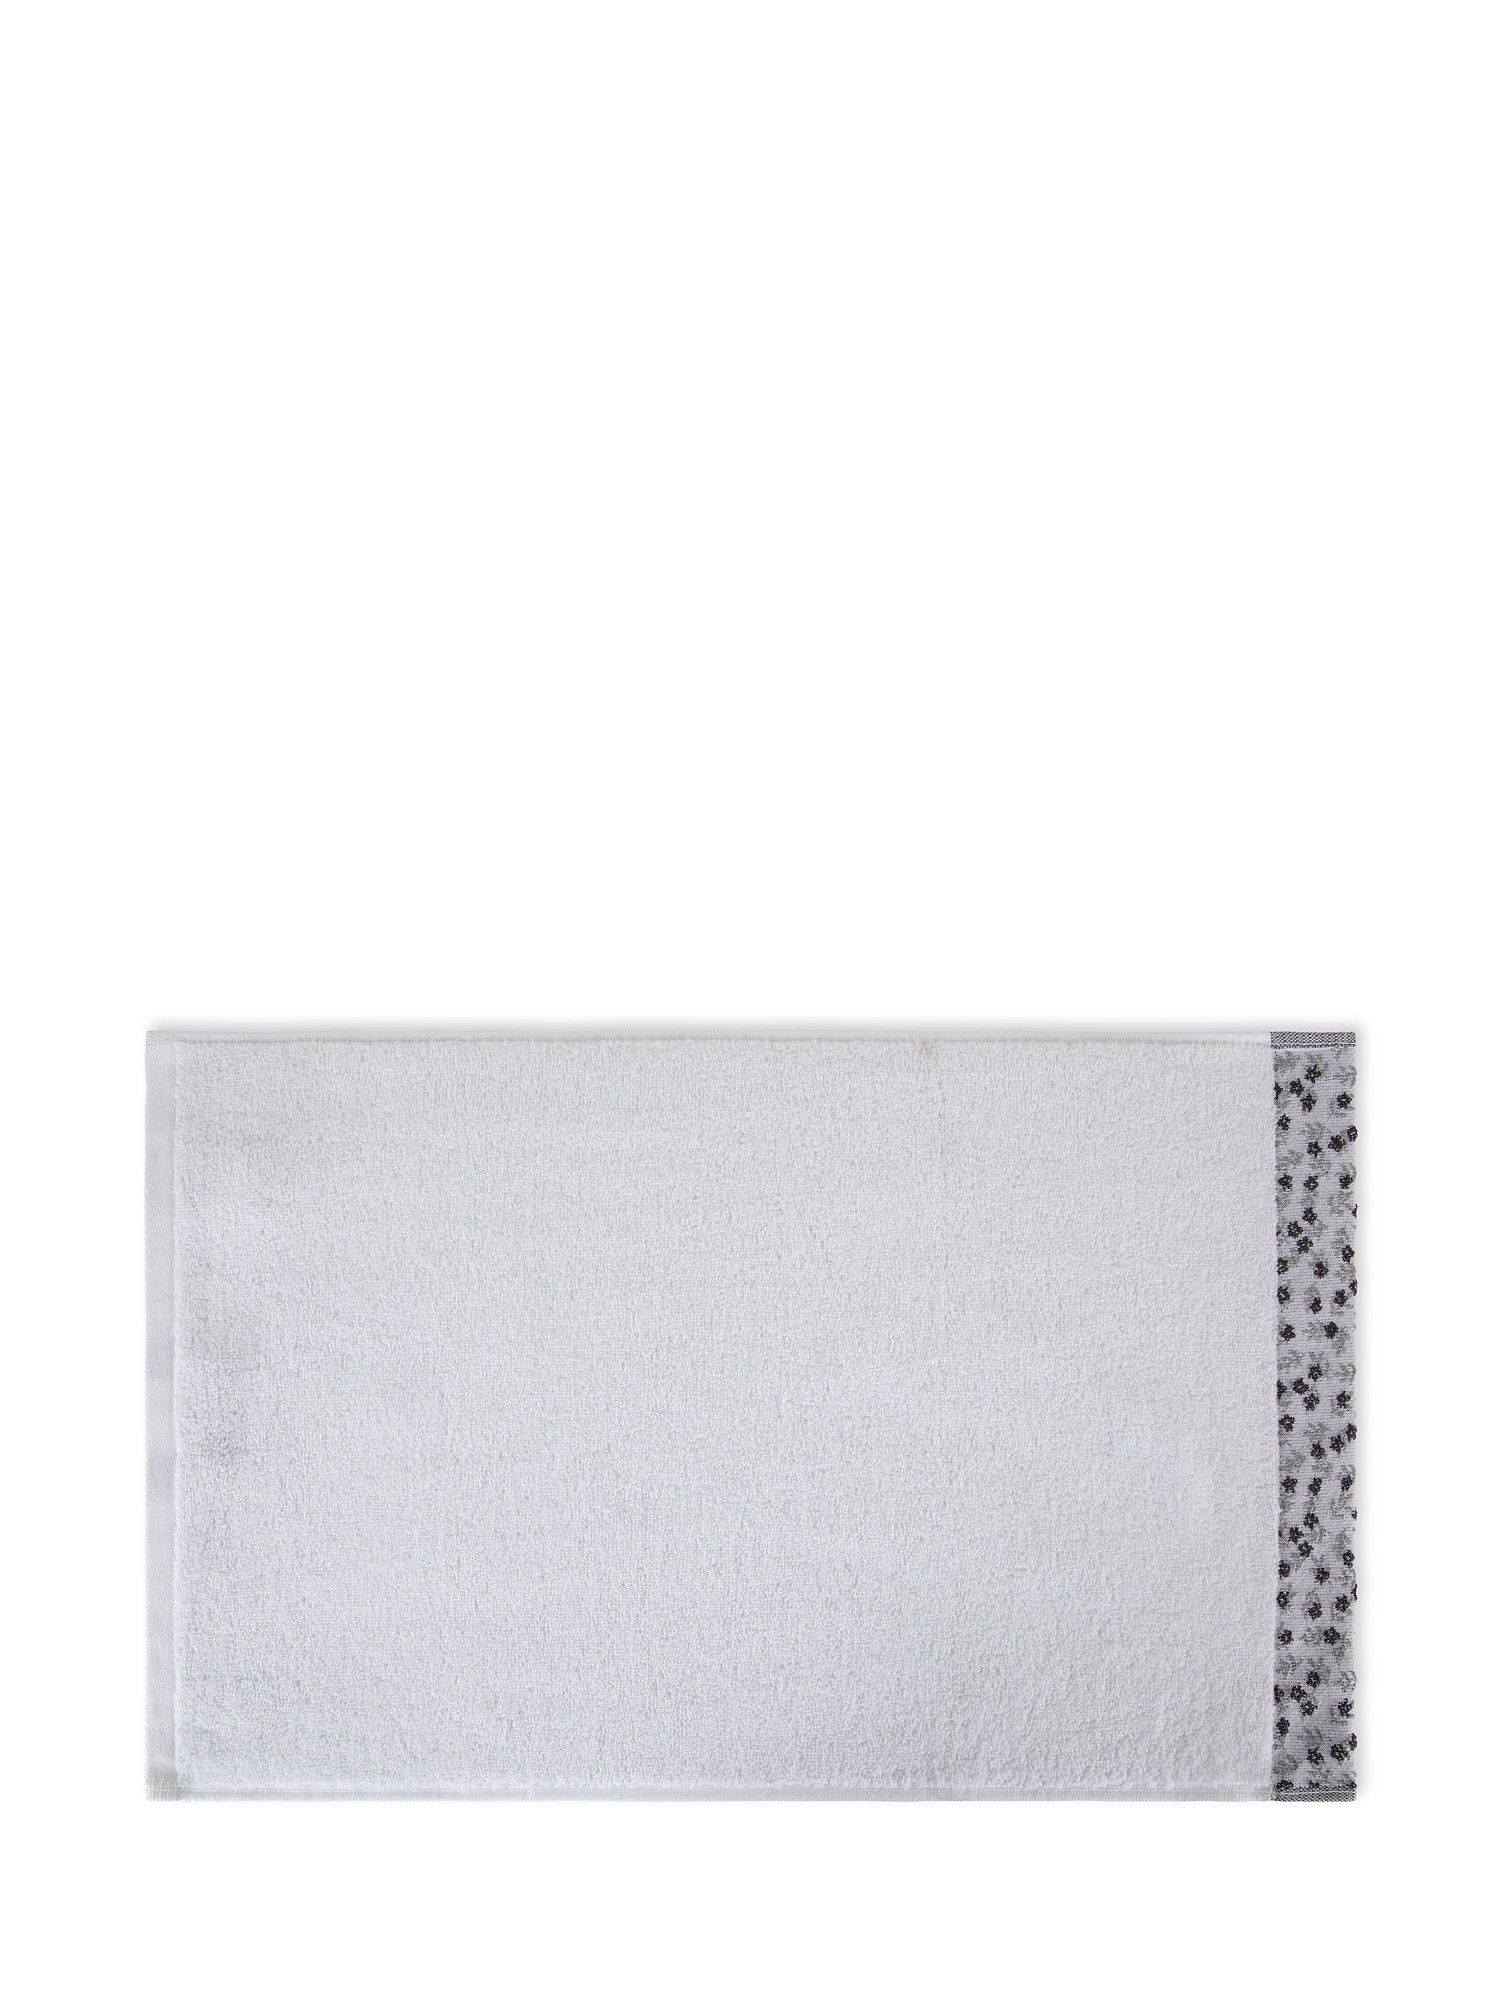 Asciugamano spugna di cotone bordo floreale, Bianco, large